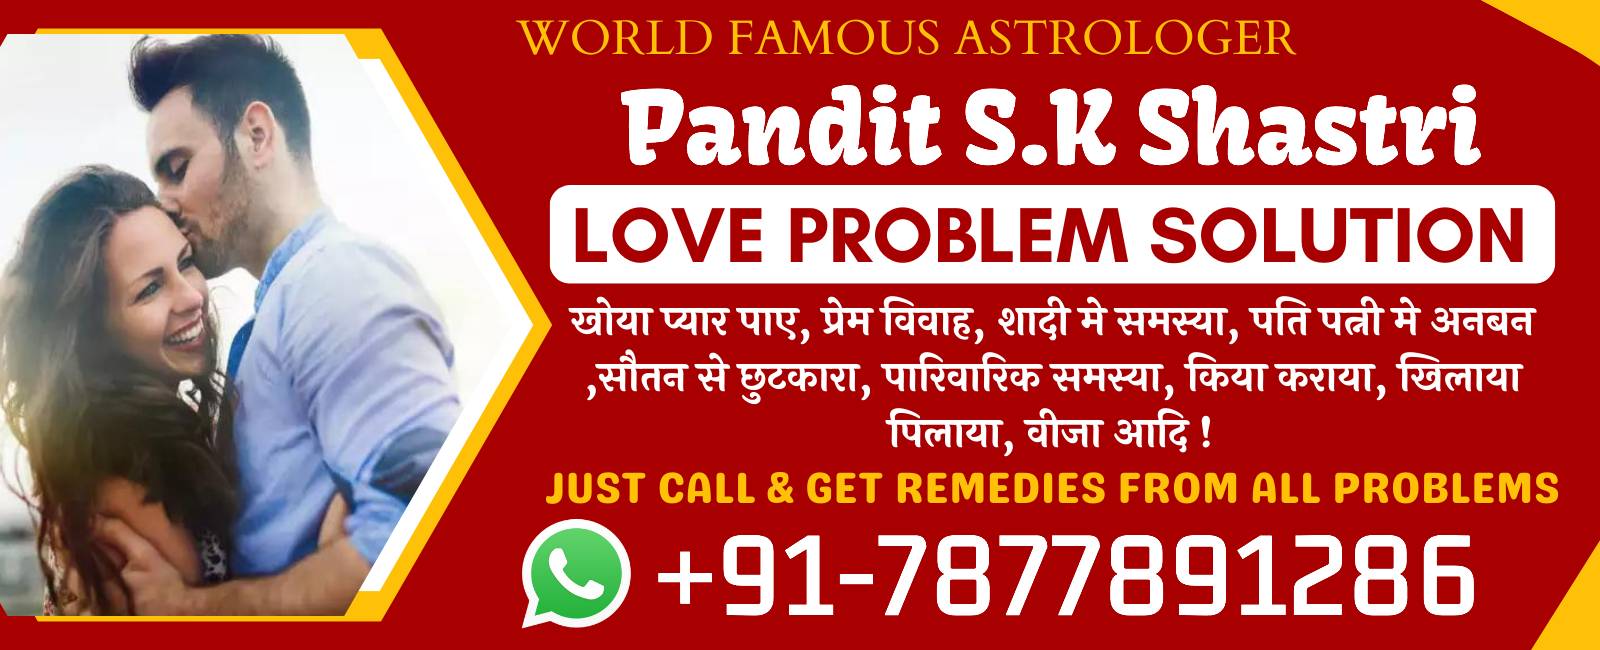 Diamond Gold Medalist Pandit S.K Shastri  +91-7877891286